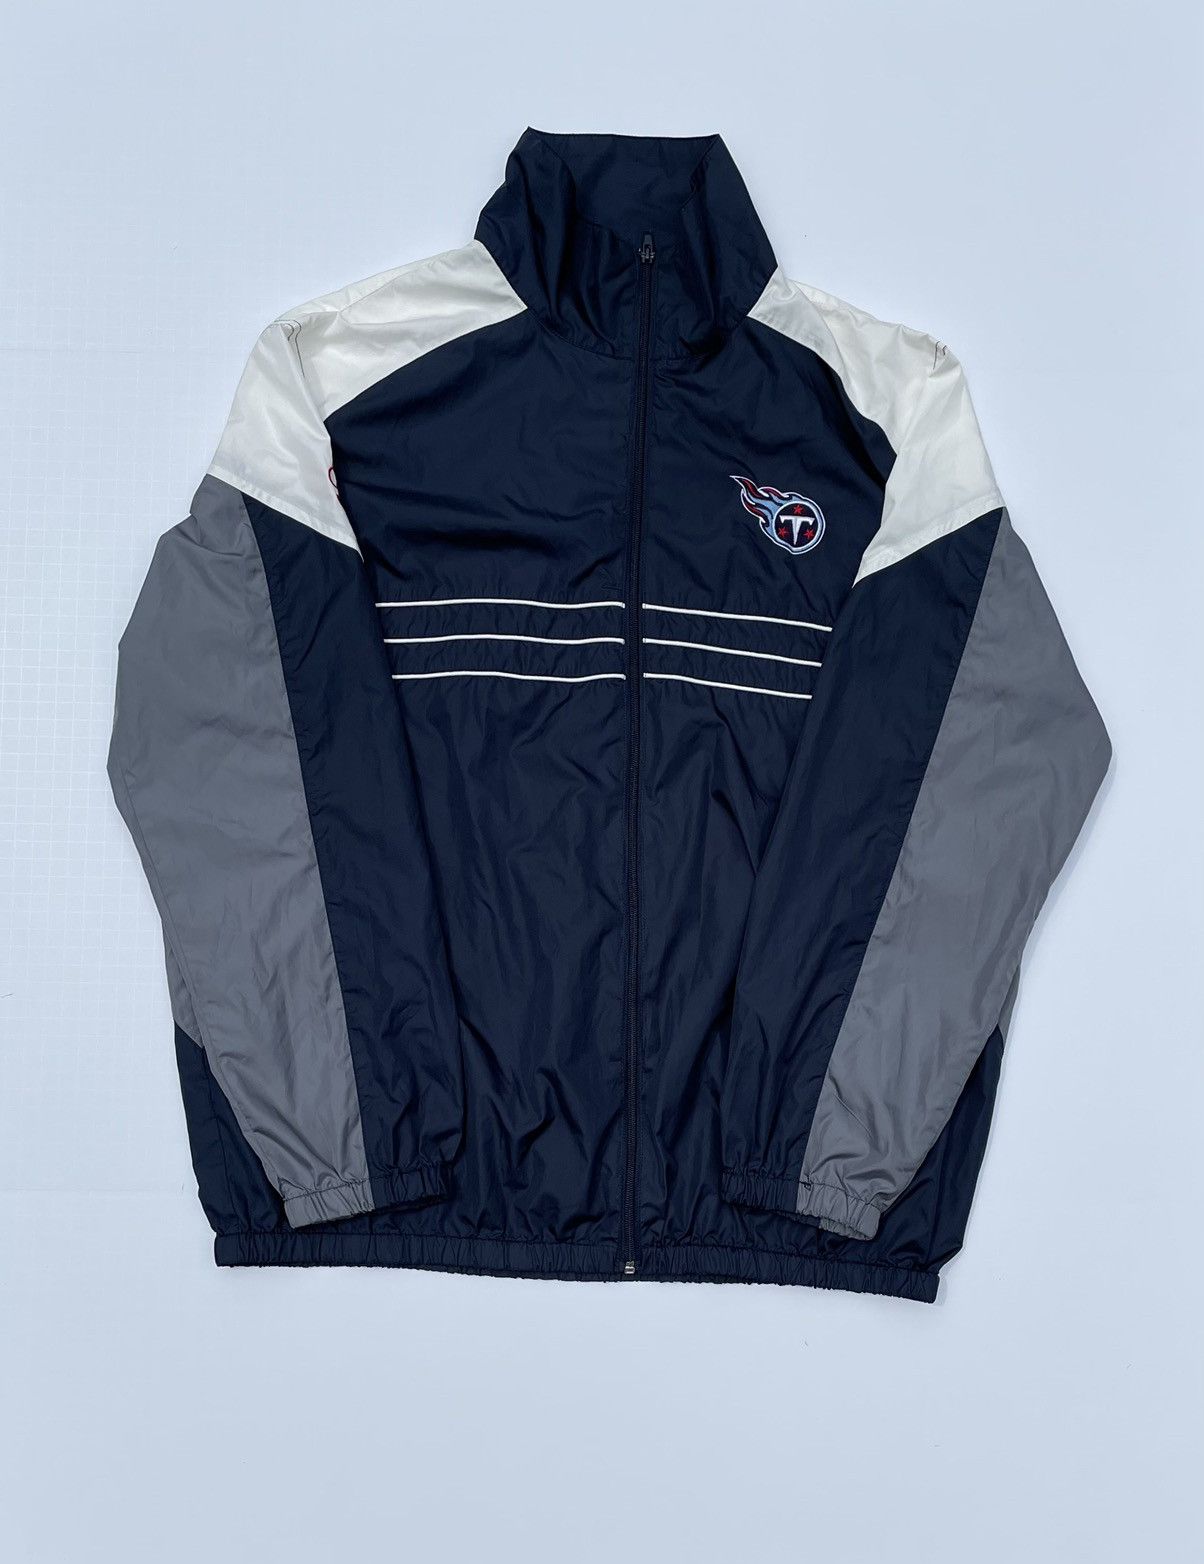 NFL vintage 90s NFL TENNESSEE TITANS windbreaker jacket Size US XL / EU 56 / 4 - 1 Preview